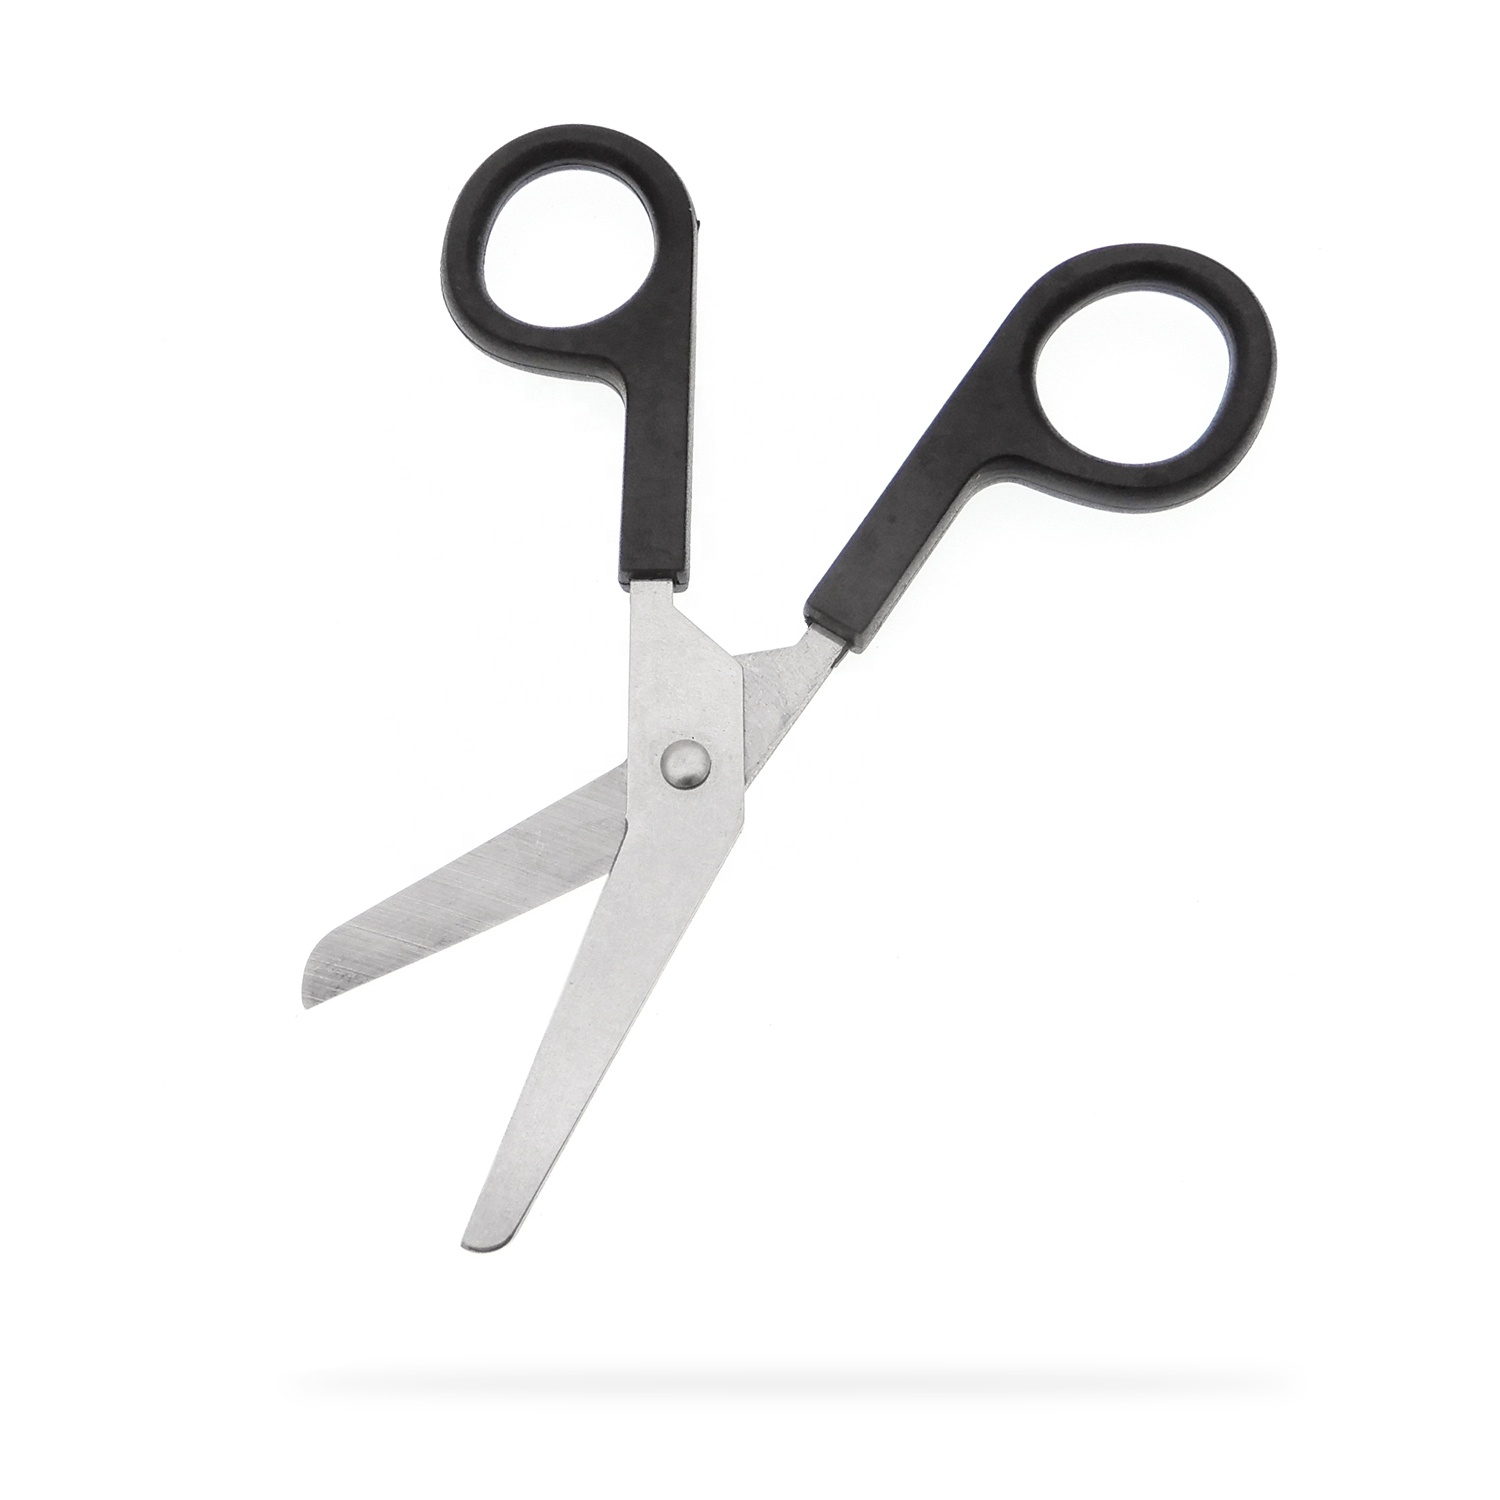 S-2675 Bandage Scissors Household Gauze Clipper Shears Safety Stainless Steel Emergency Kits Small Plastic Bend Scissors
